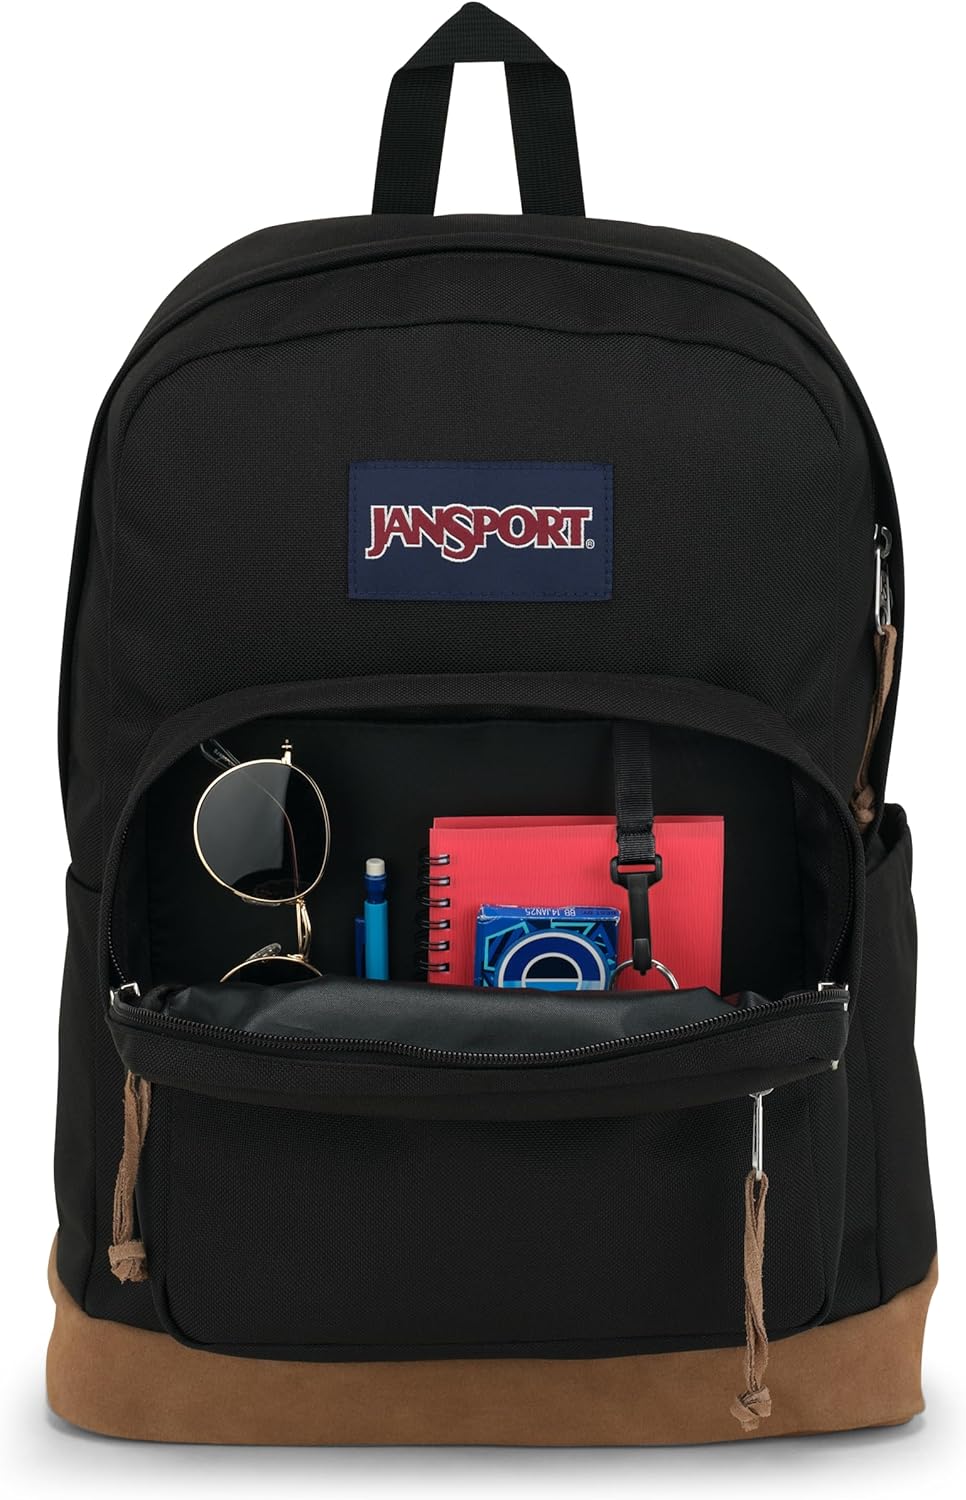 JanSport Right Pack Backpack - Travel, Work, or Laptop Bookbag with Leather Bottom, Black…